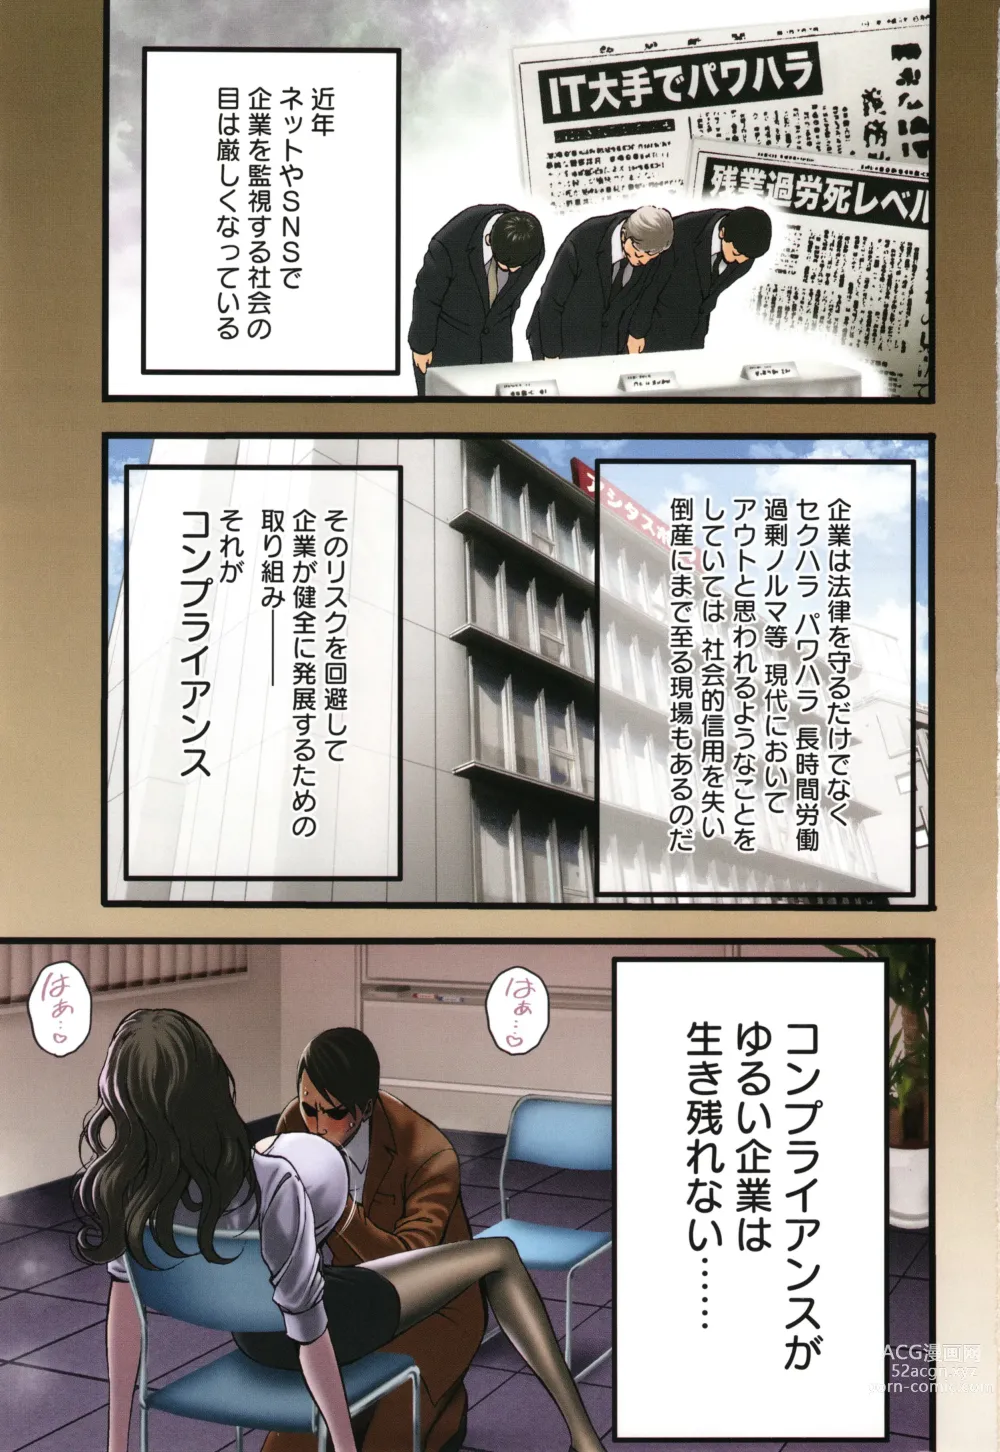 Page 5 of manga Compla Yuruyuru Chimari-san  - Chimaris compliance awareness is very lax.